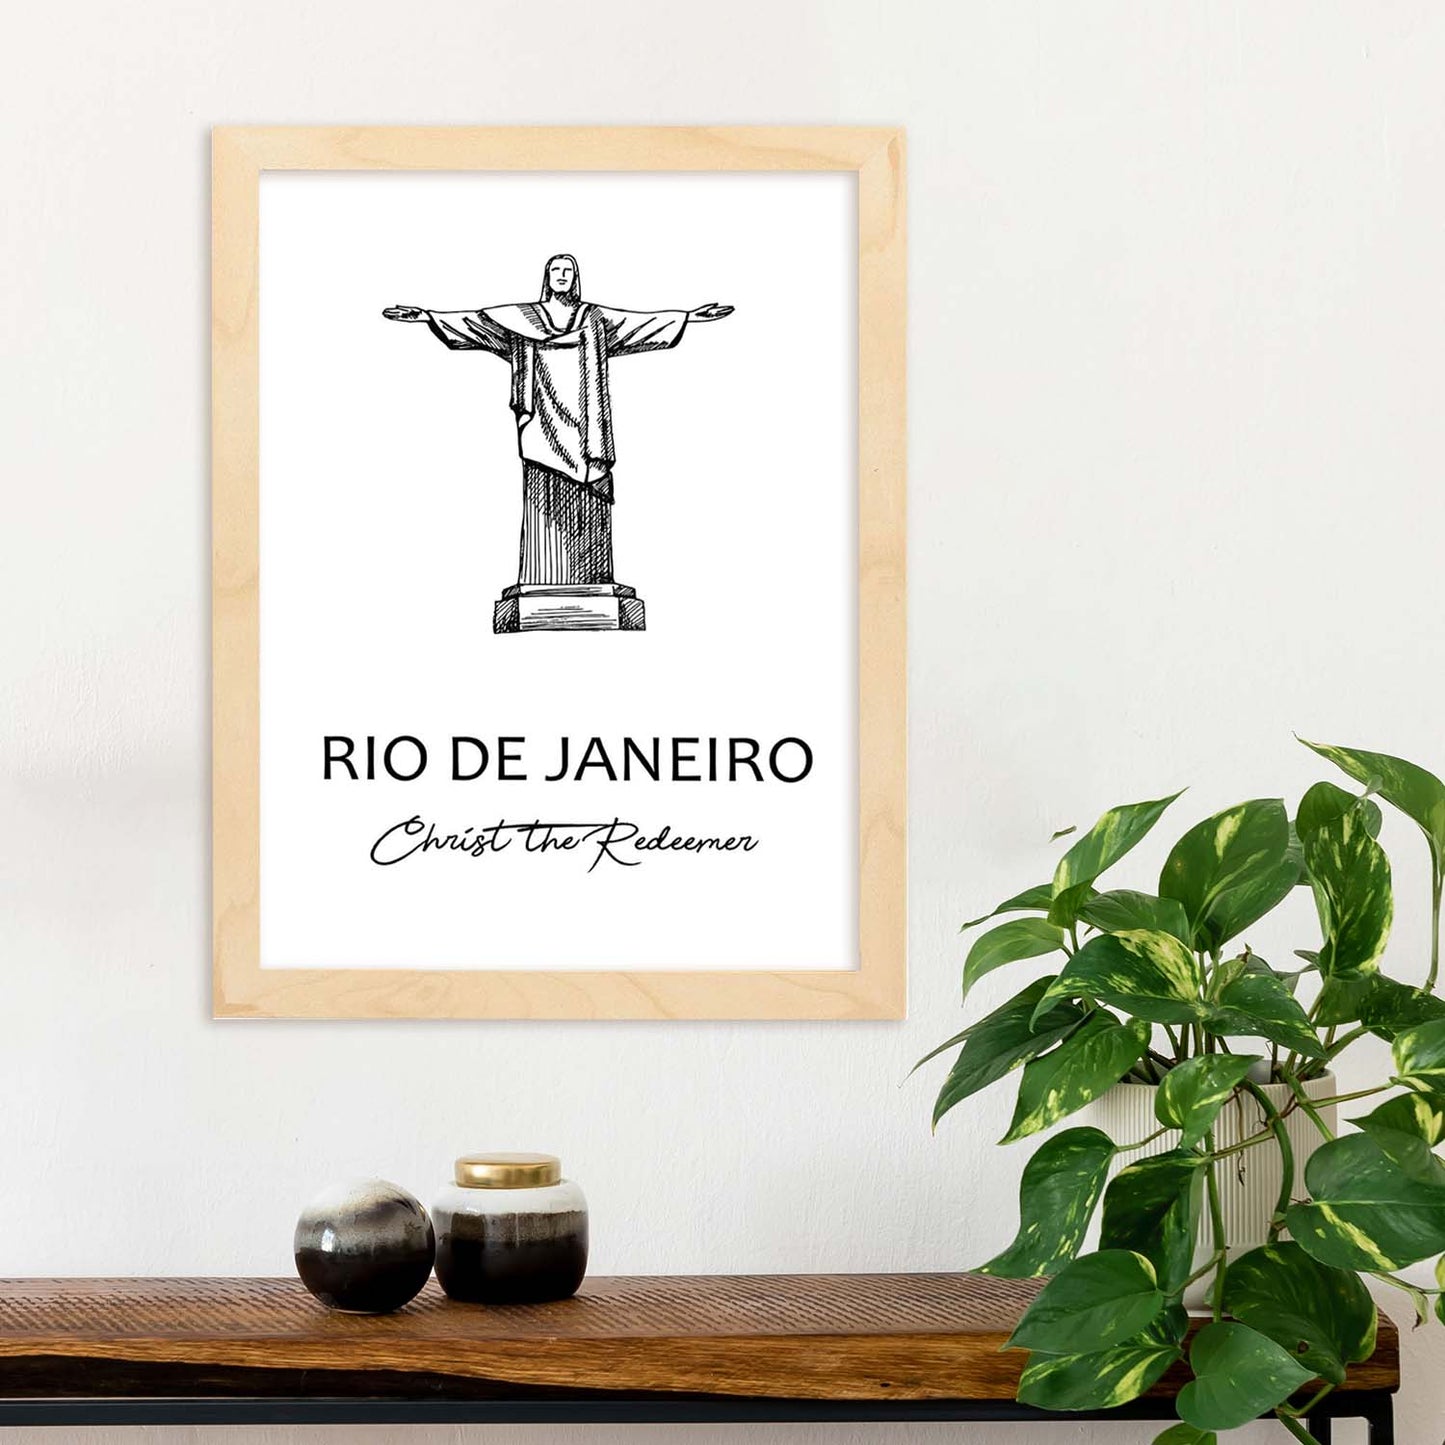 Poster de Rio de Janeiro - Cristo redentor. Láminas con monumentos de ciudades.-Artwork-Nacnic-Nacnic Estudio SL